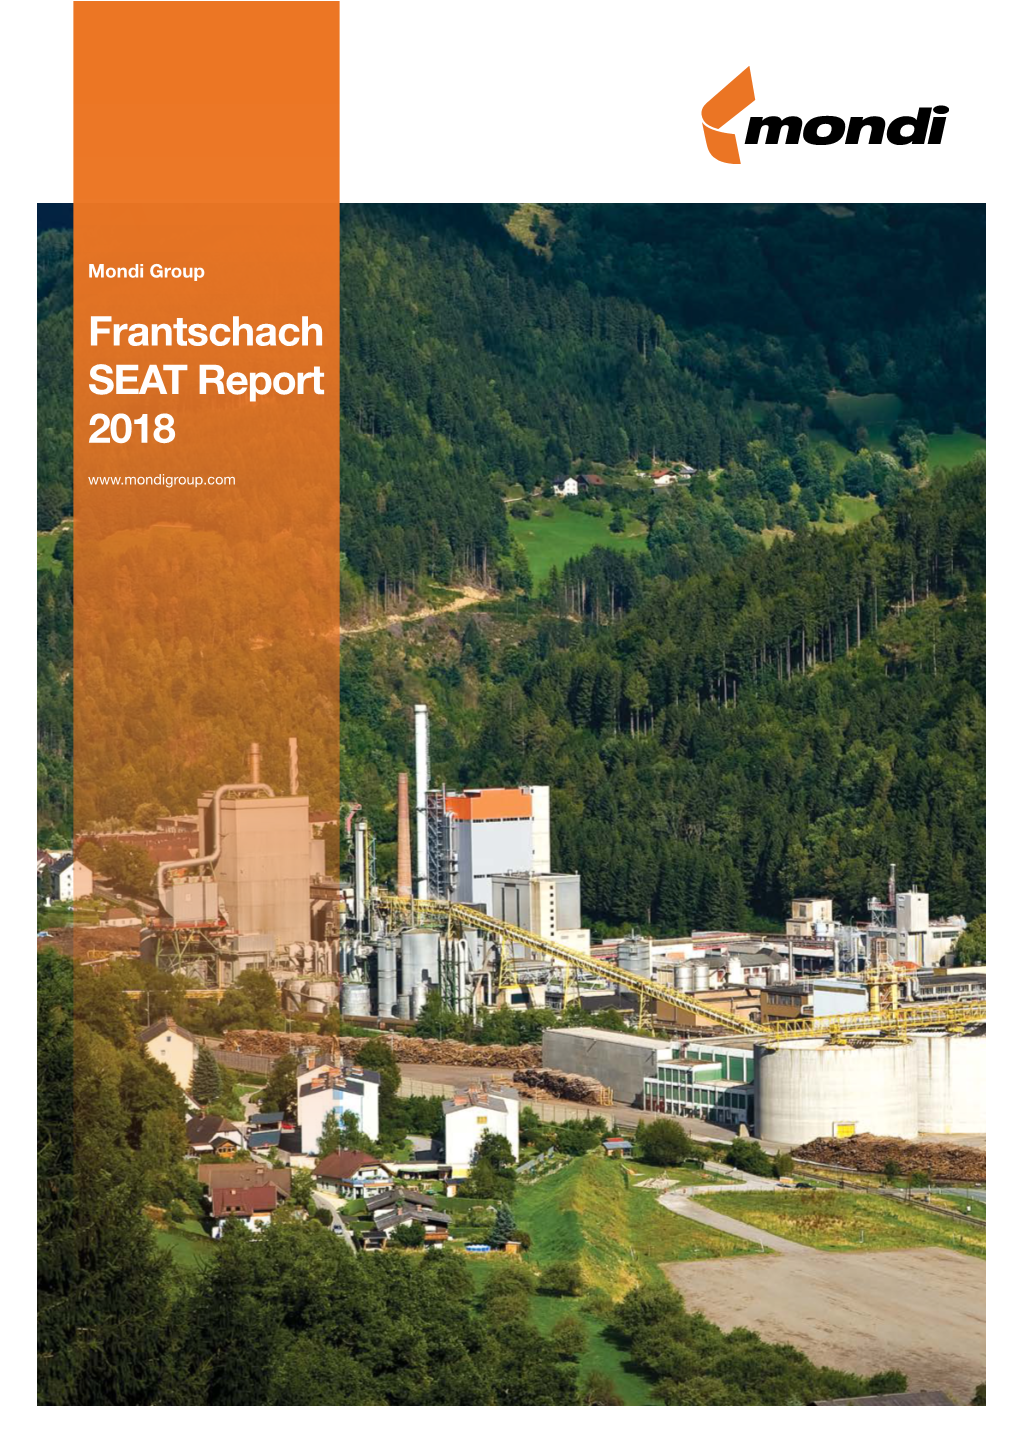 Frantschach SEAT Report 2018 Contents